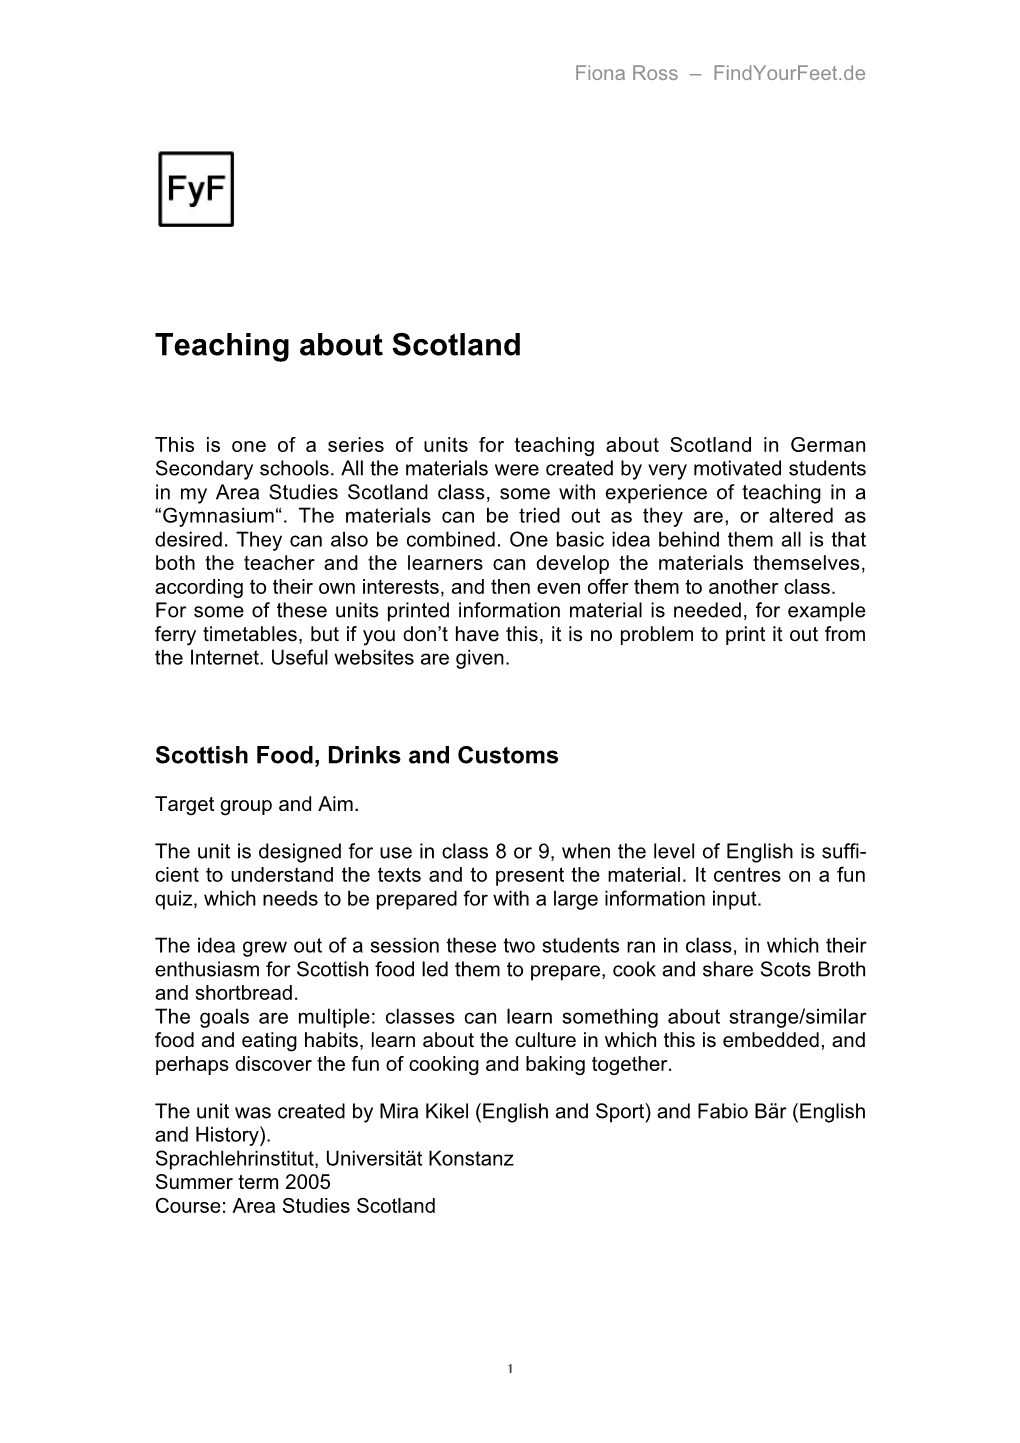 Teaching About Scotland